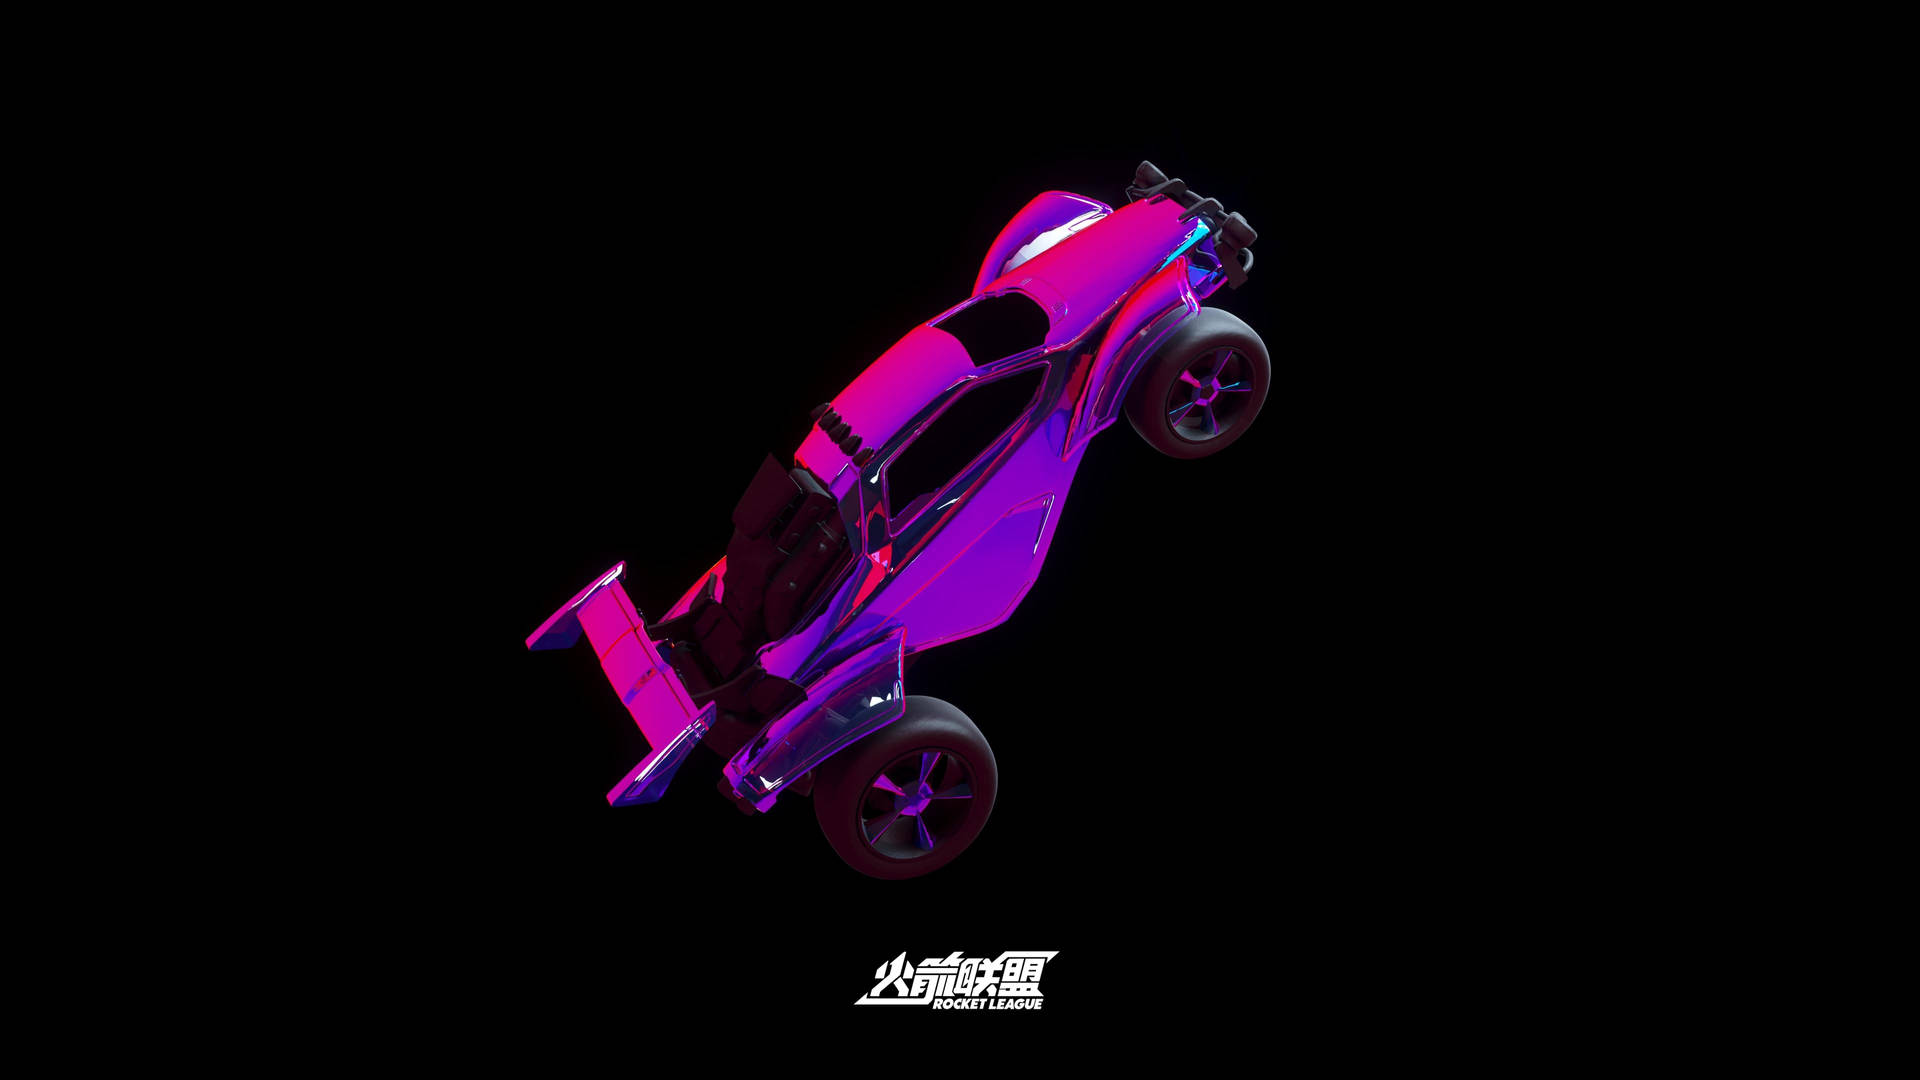 Cool Rocket League Pink Dune Racer Car Wallpaper